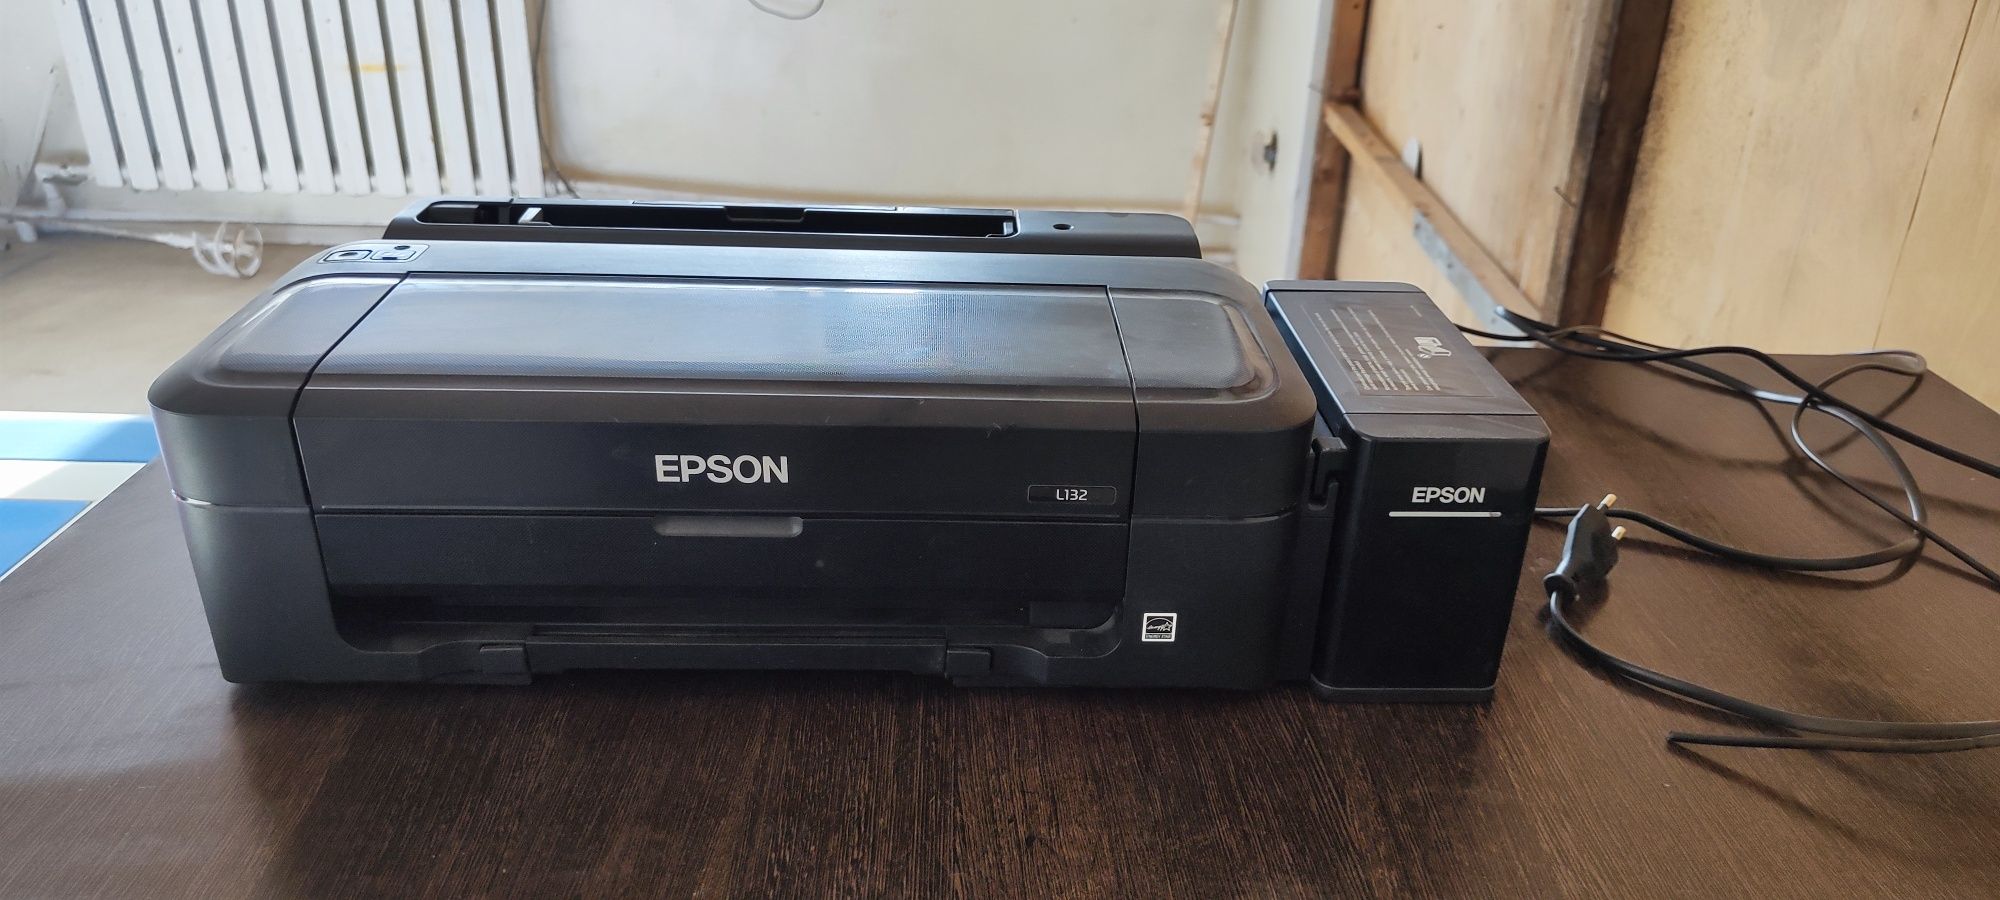 Epson l132 принтер